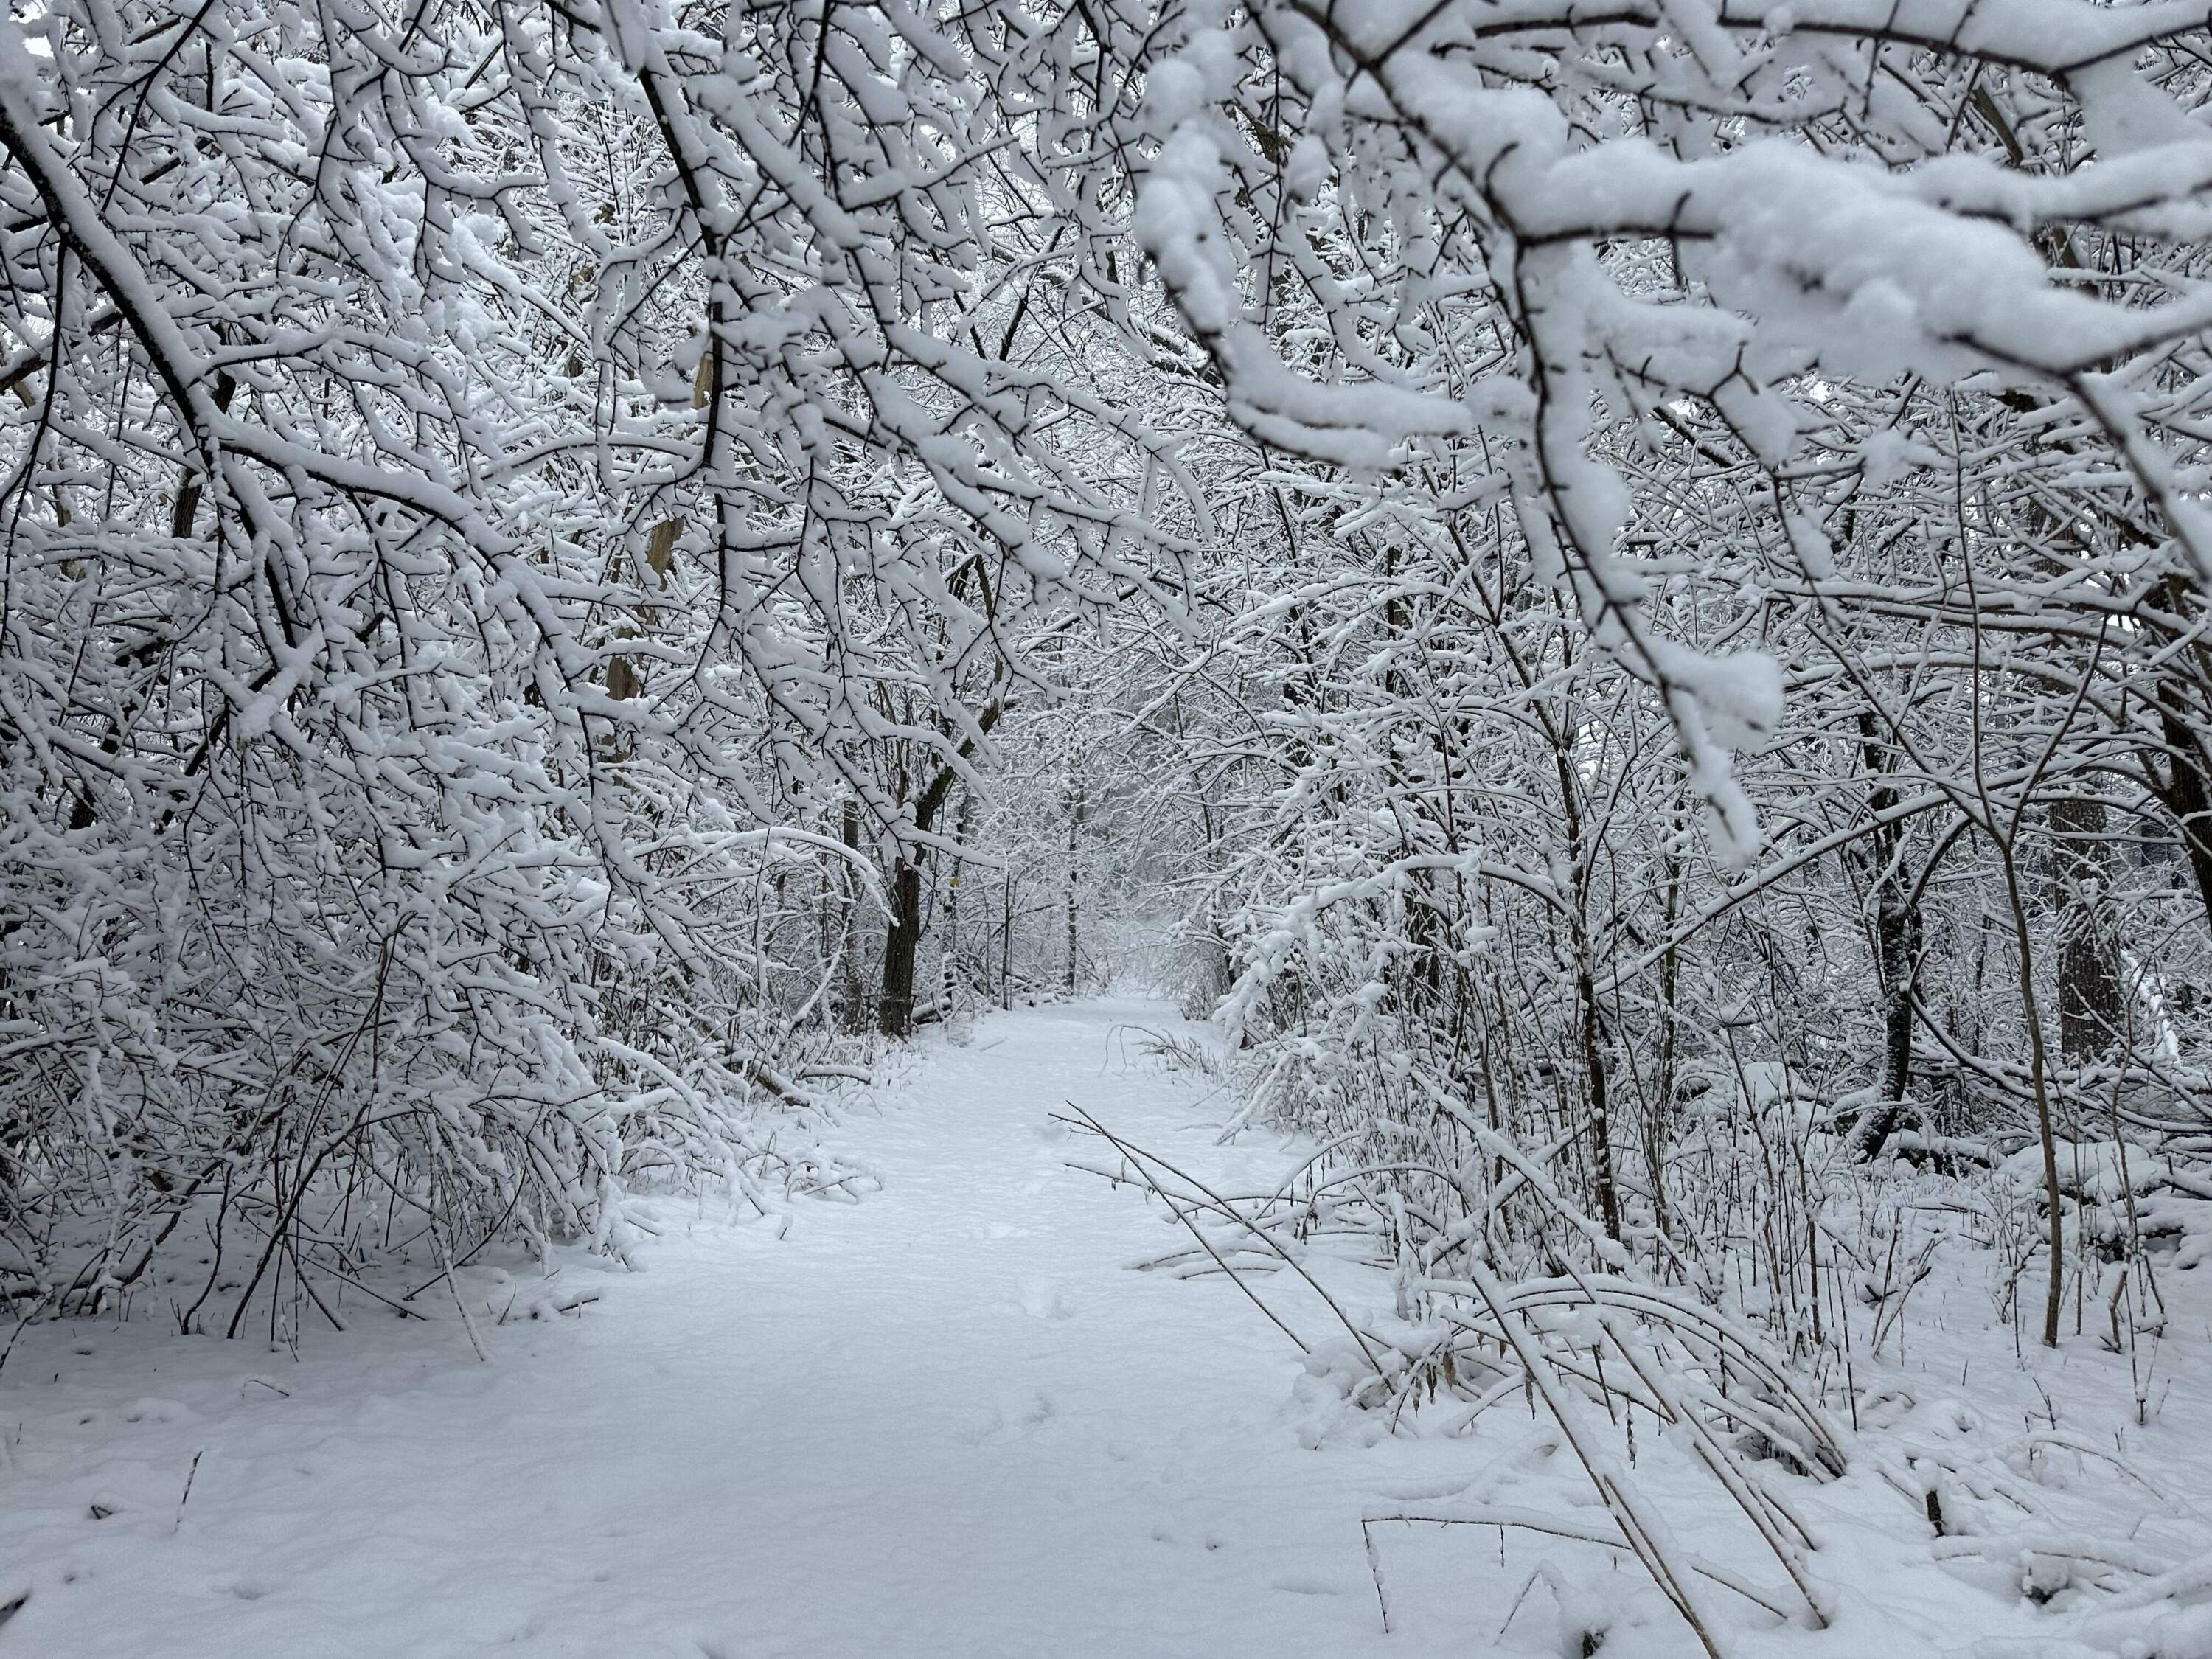 Heavy snow fell in some communities across Massachusetts as a major winter storm hit the region overnight Sunday. (Gabrielle Emanuel/WBUR)